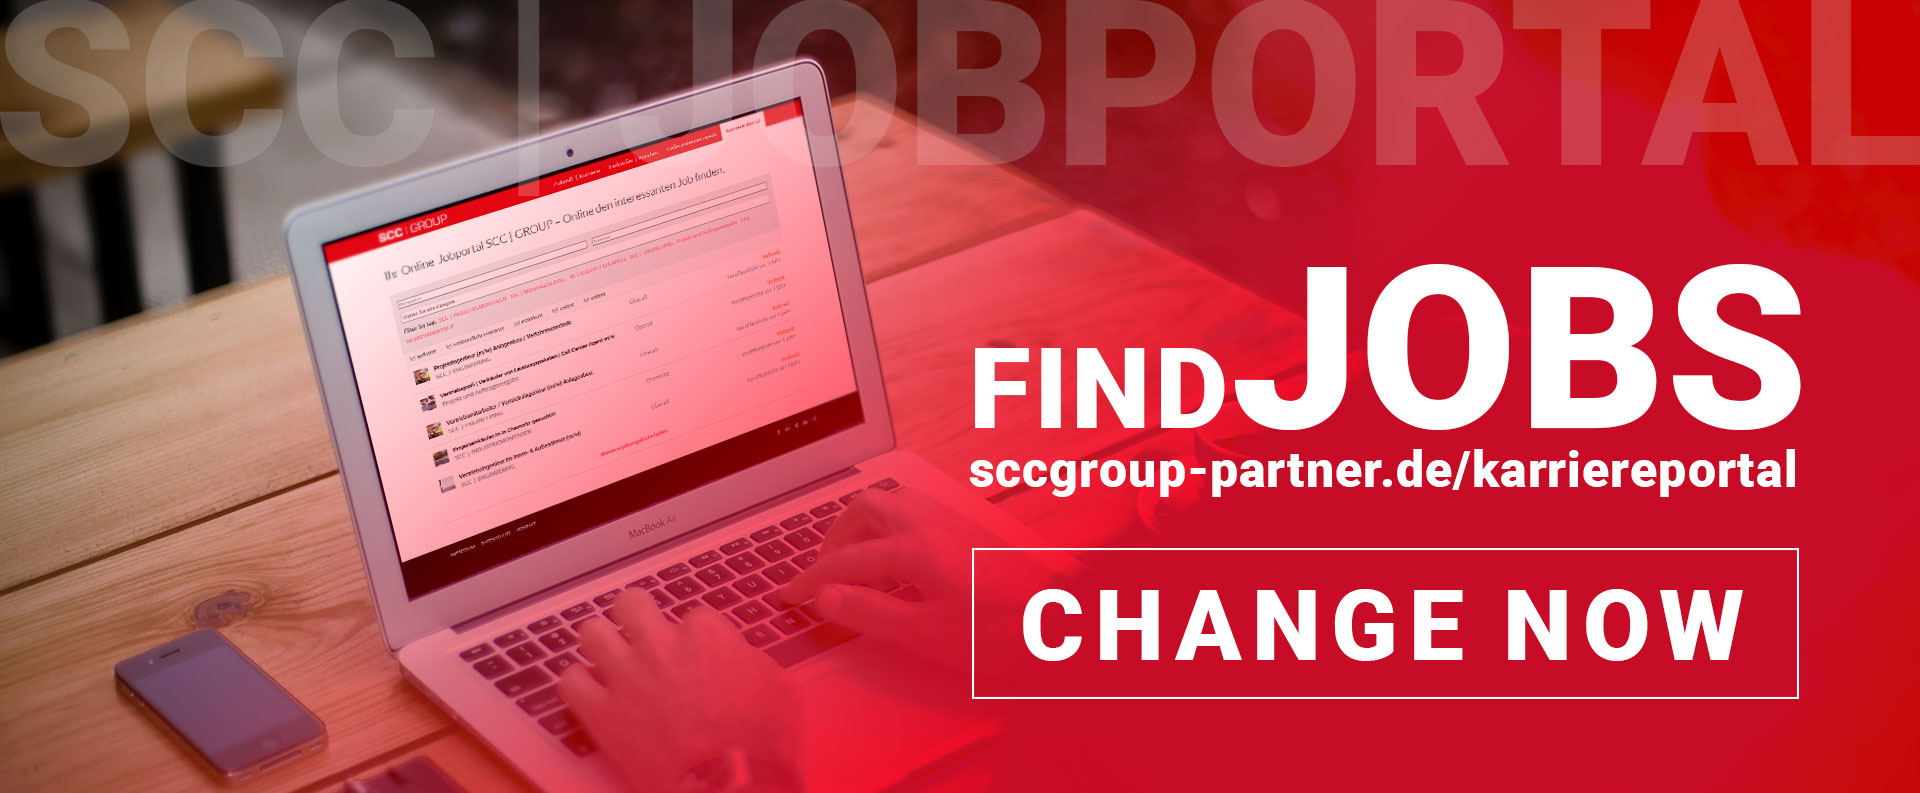 Find Jobs on http://sccgroup-partner.de/karriereportal/